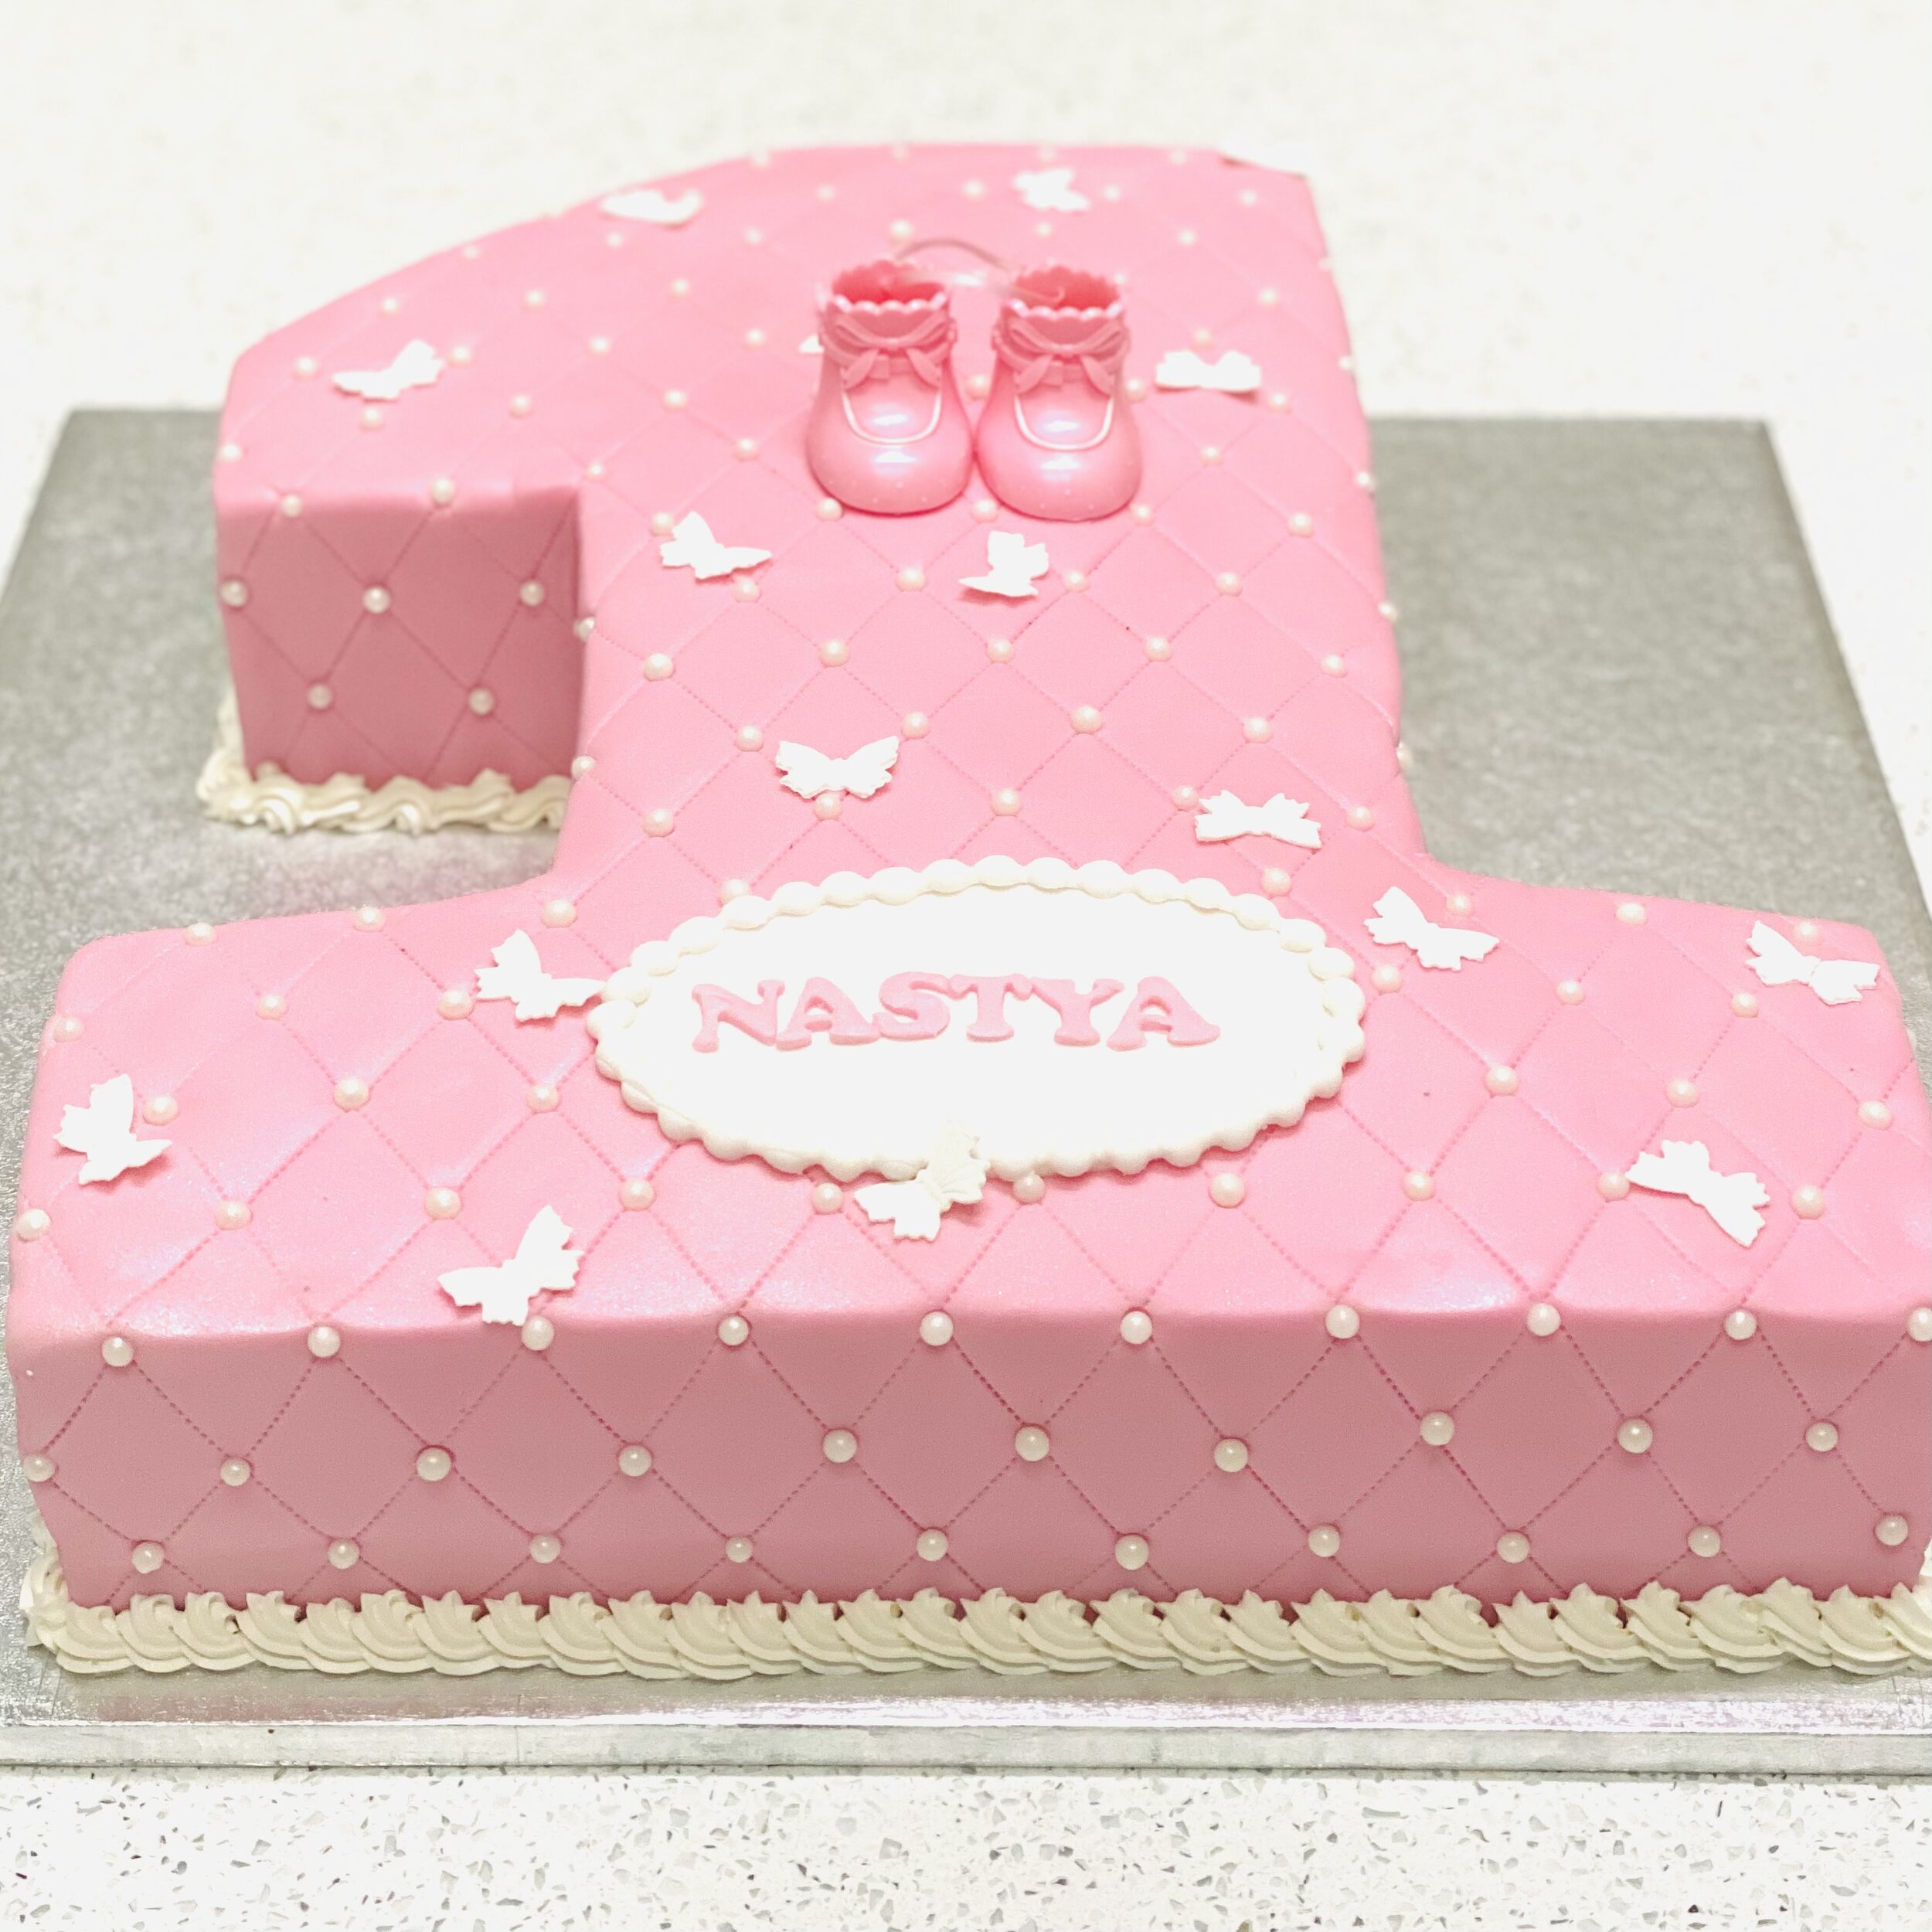 First Birthday Cake, 1st baby birthday cake designs